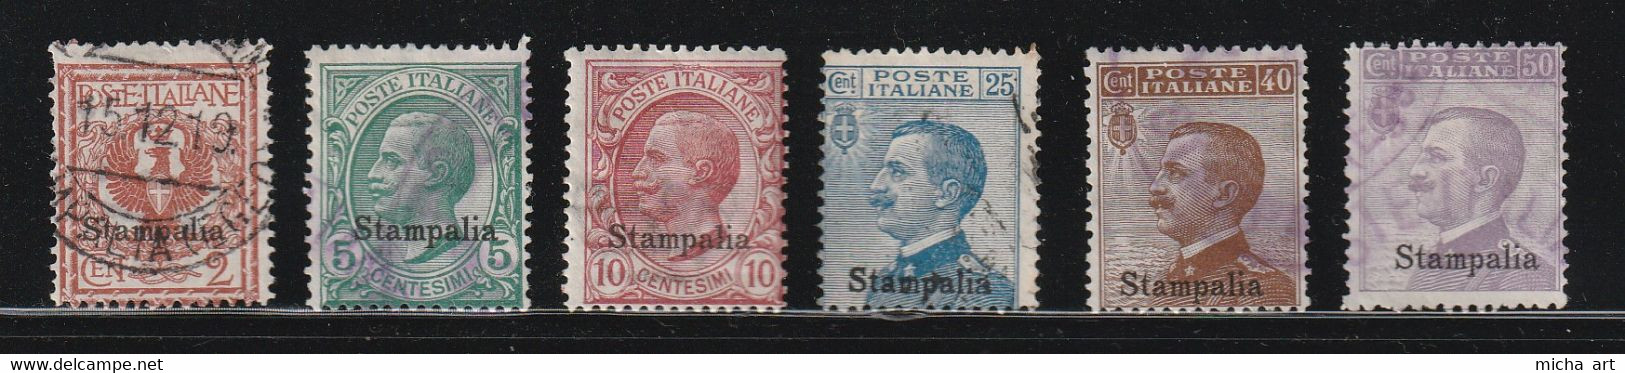 Italian Colonies 1912 Greece Aegean Islands Egeo Stampalia No 1-7 (except 4) Lot Used (B352-25) - Ägäis (Stampalia)